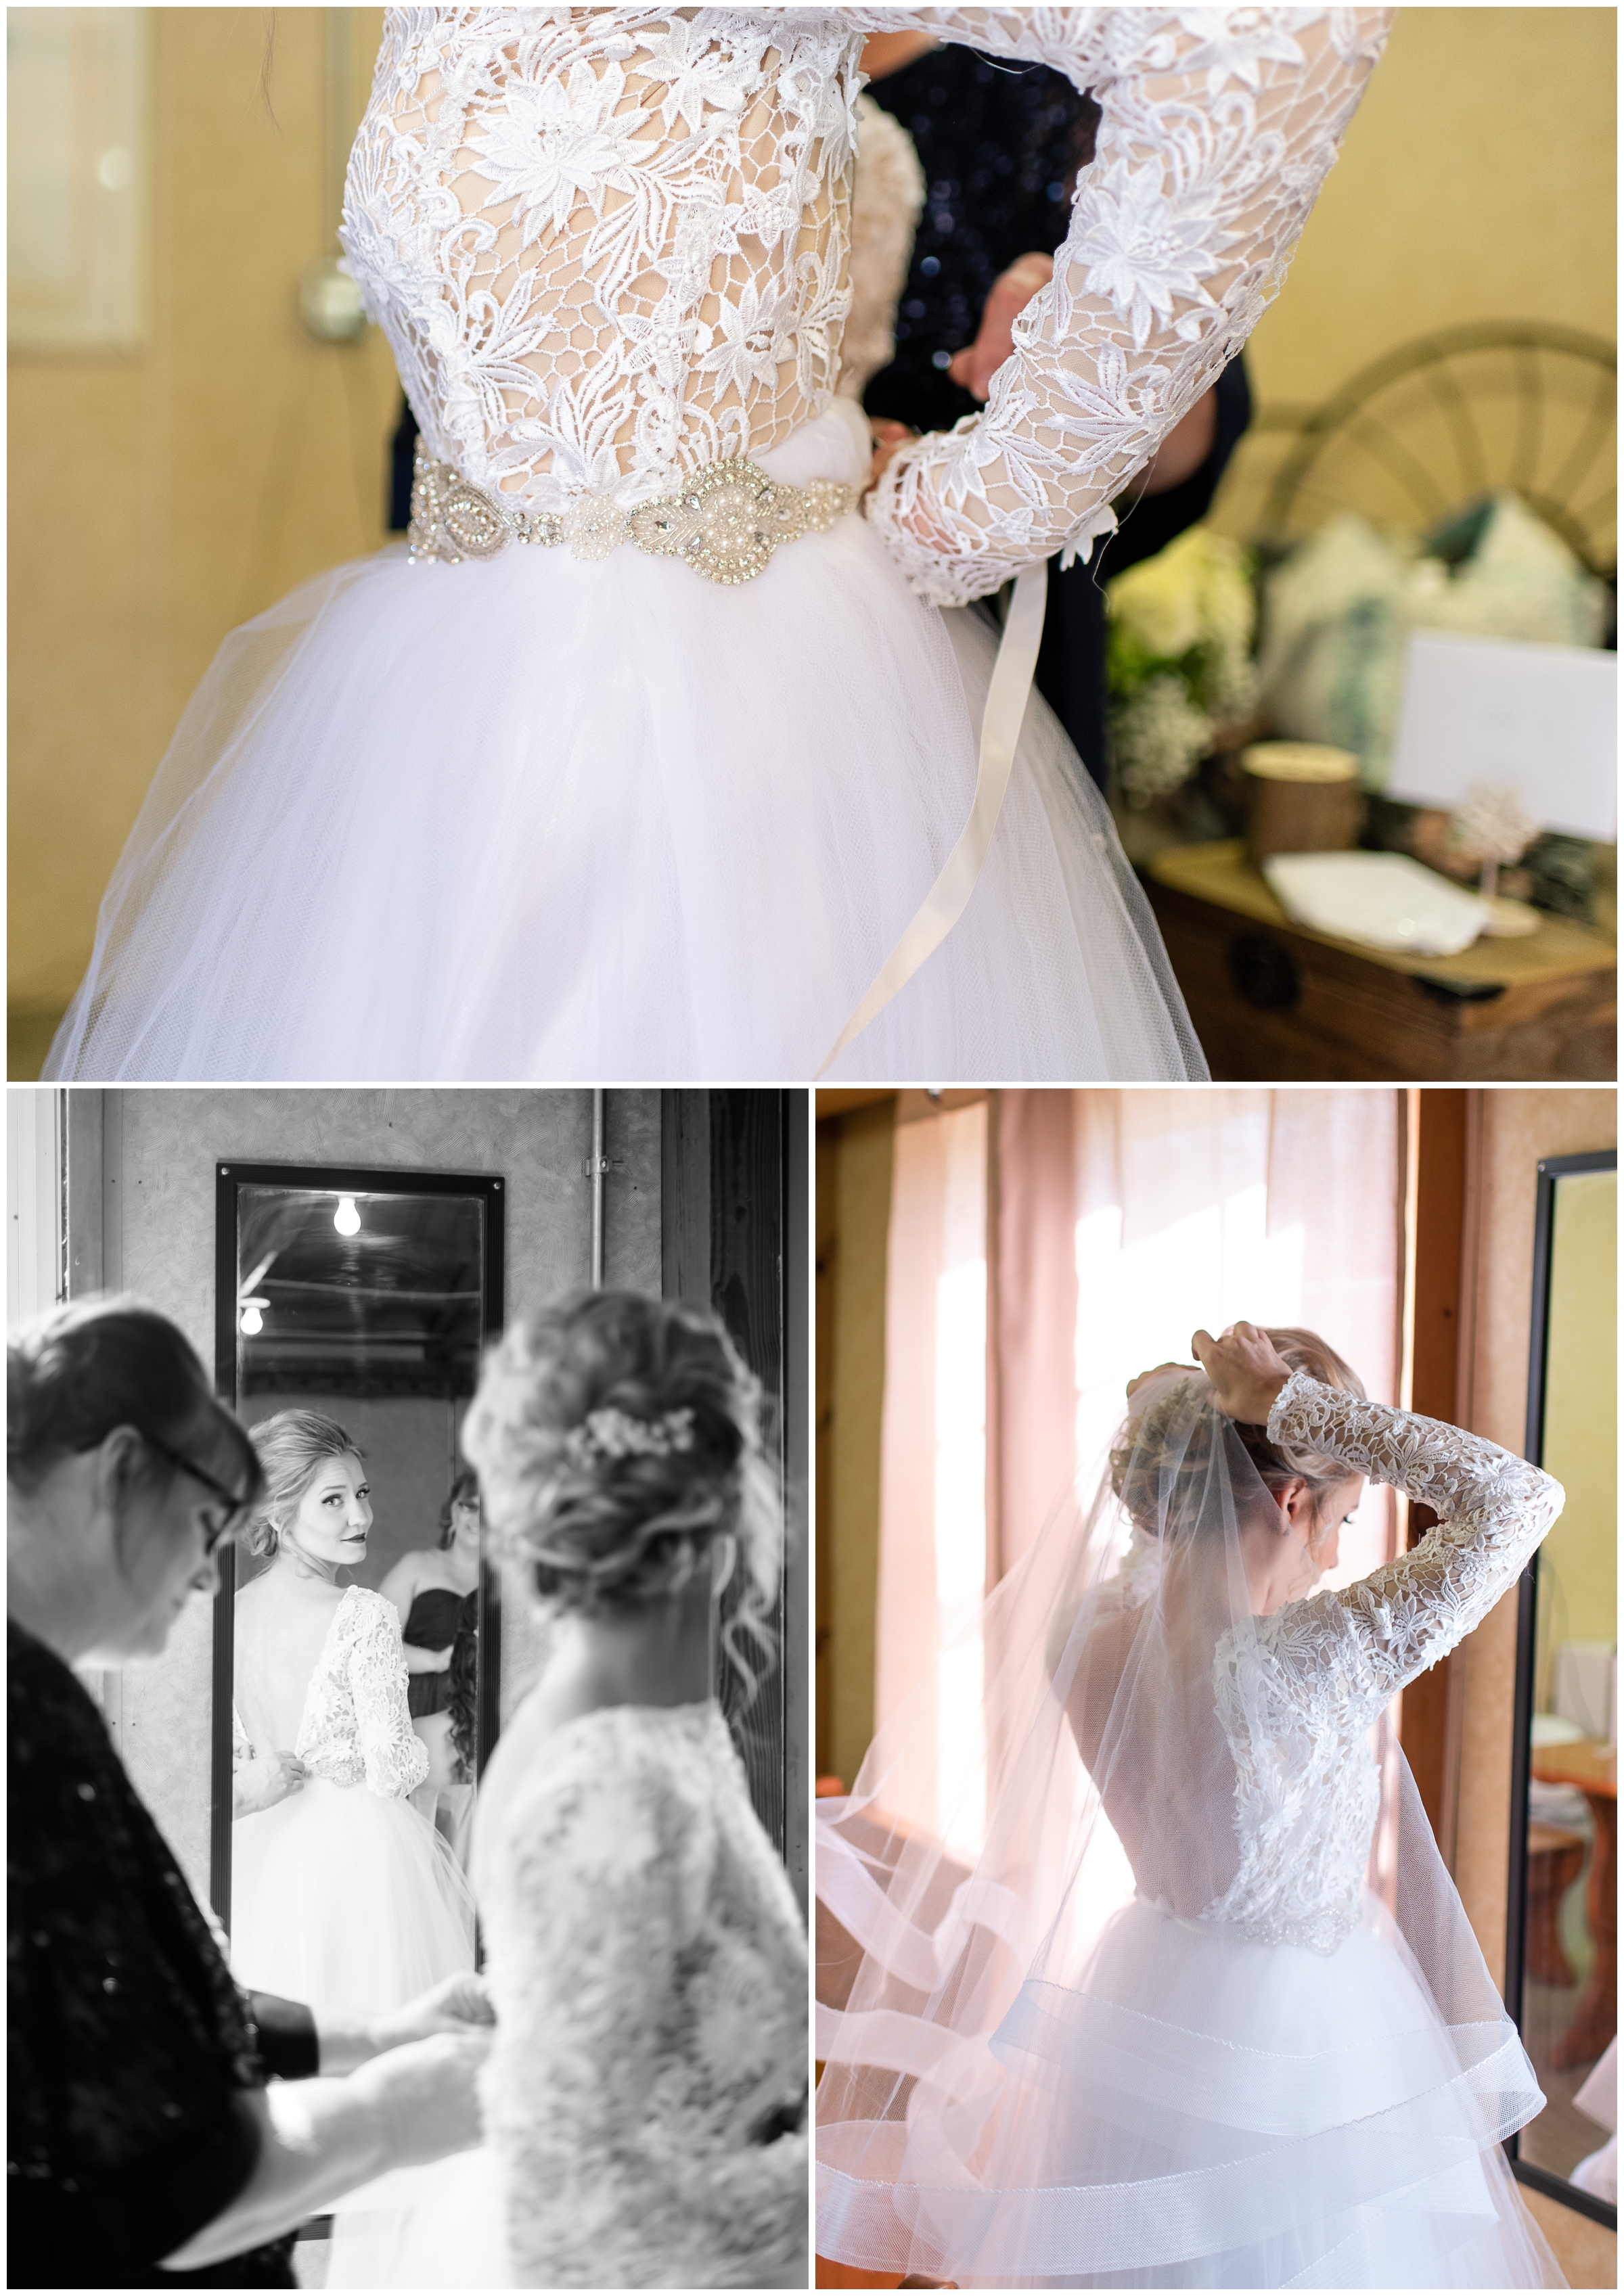 Buck Lake Ranch Wedding - Bride putting on dress